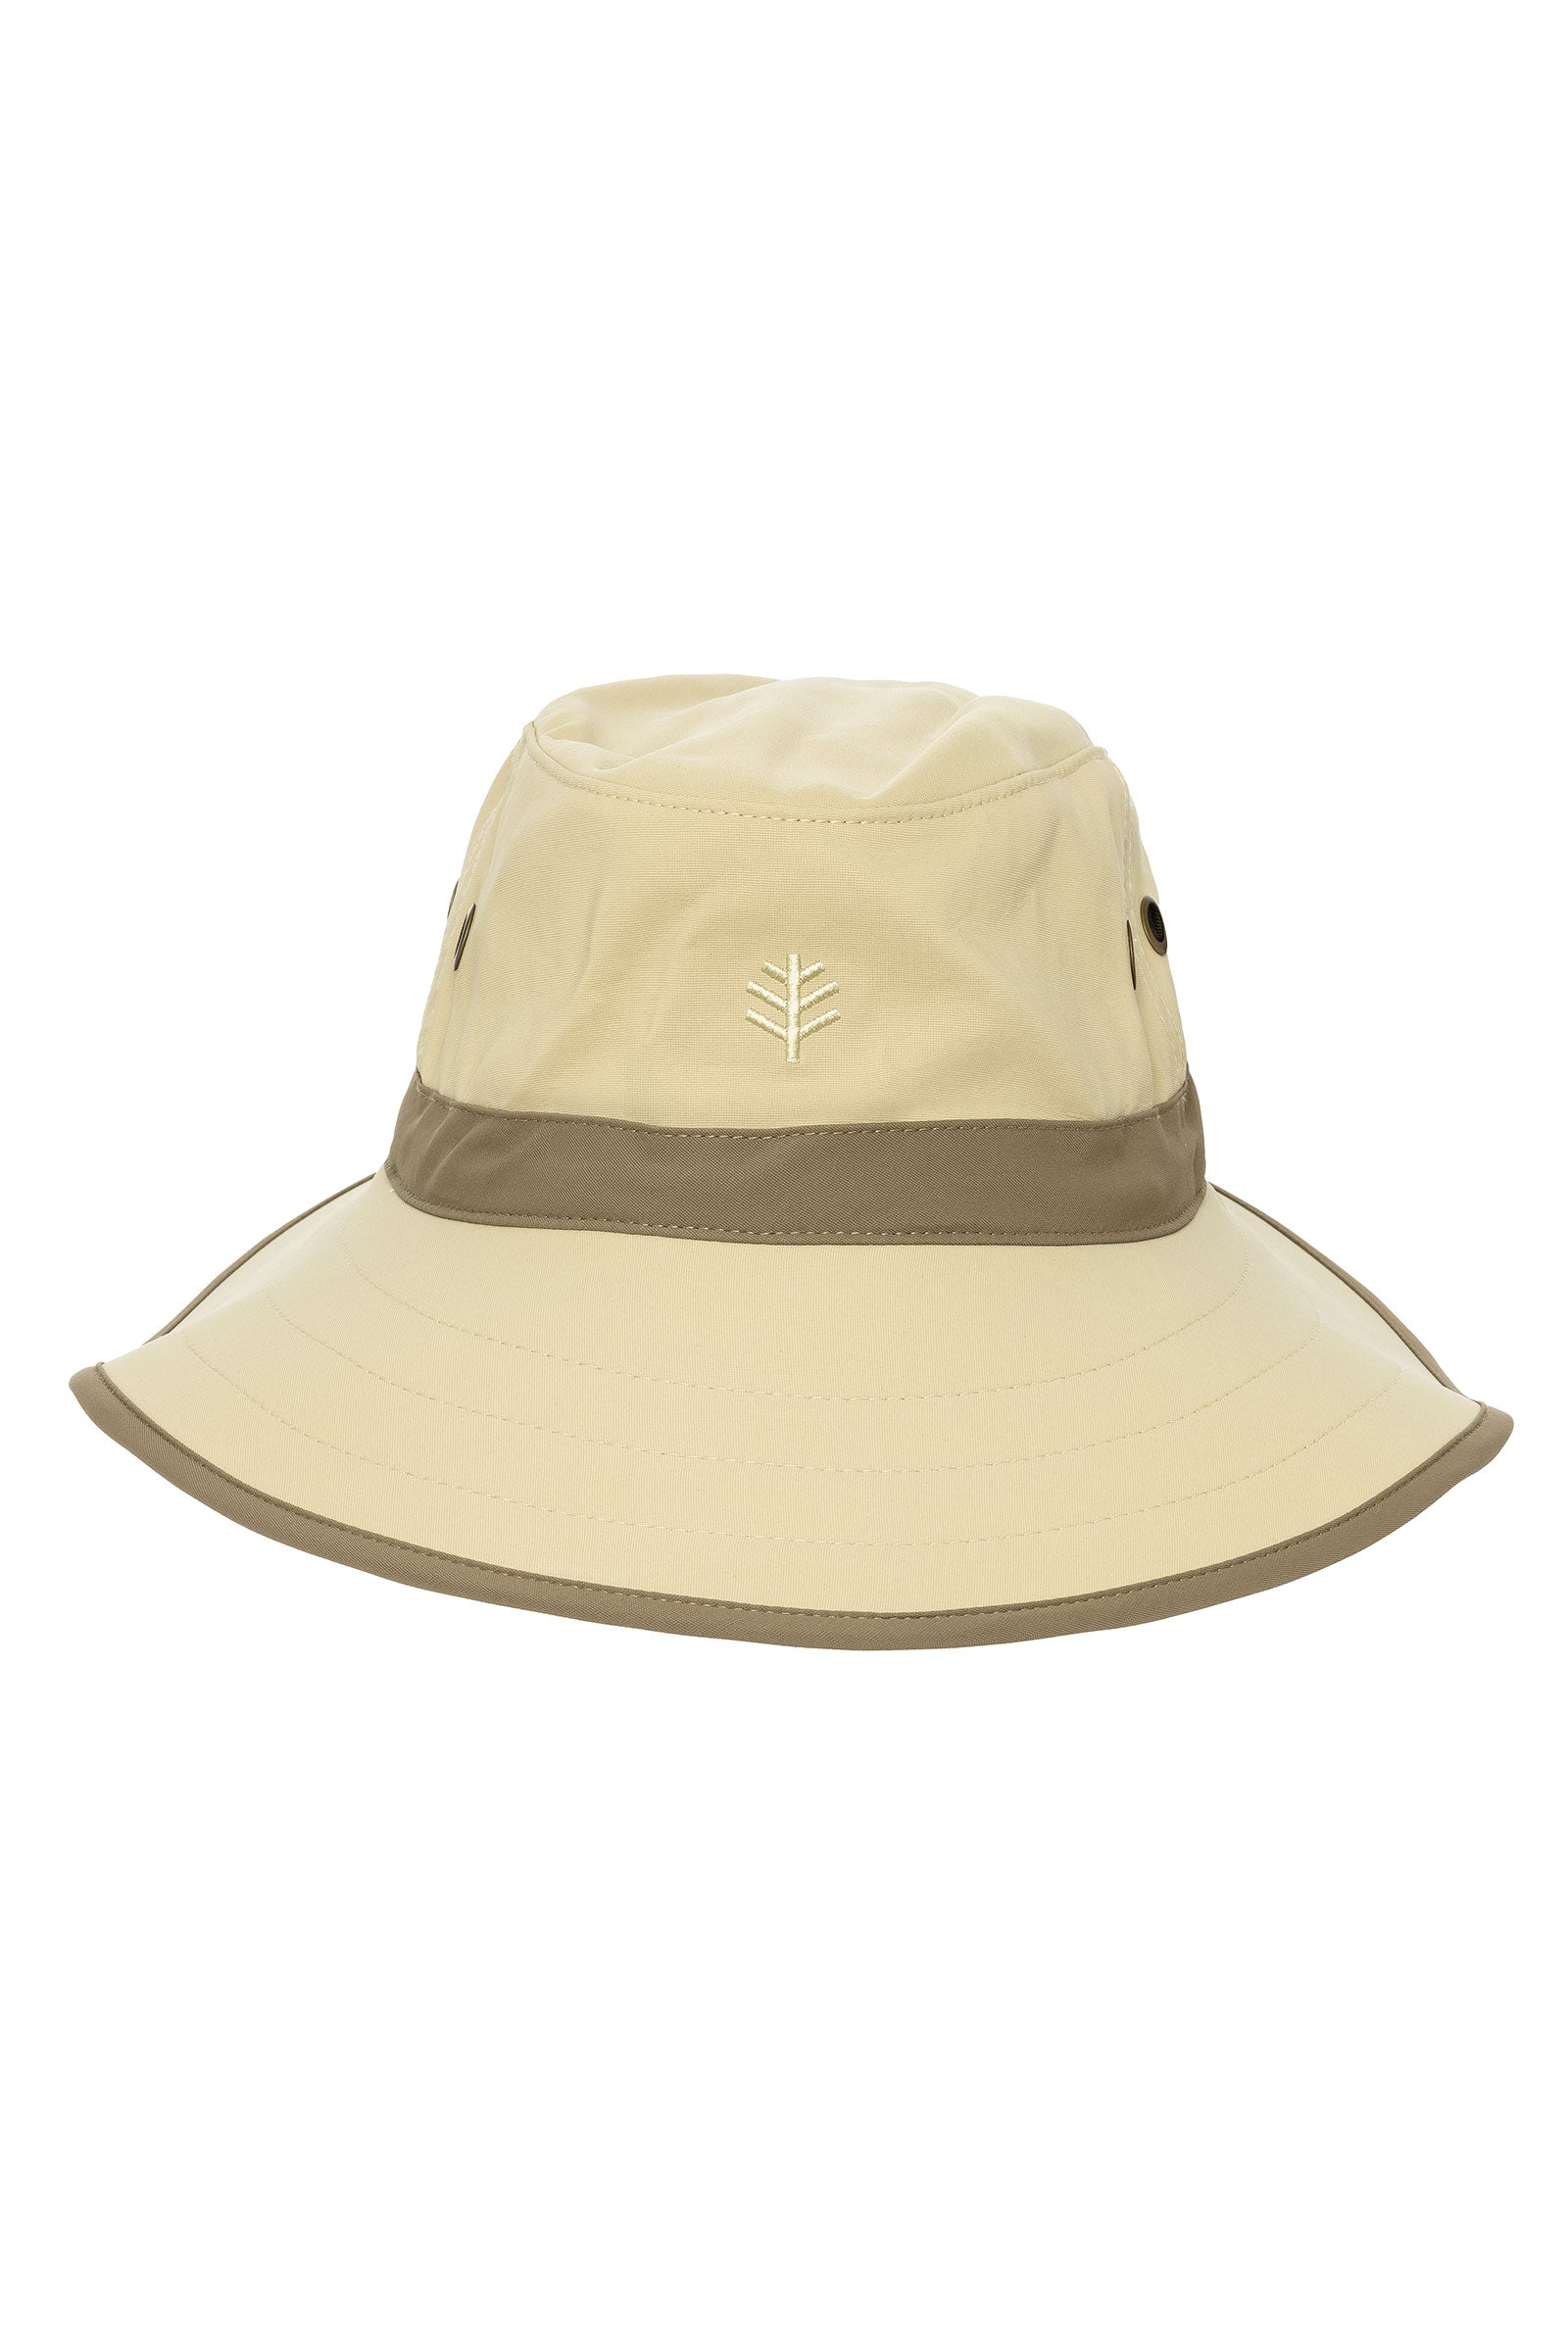 Unisex Matchplay Golf Hat UPF 50+